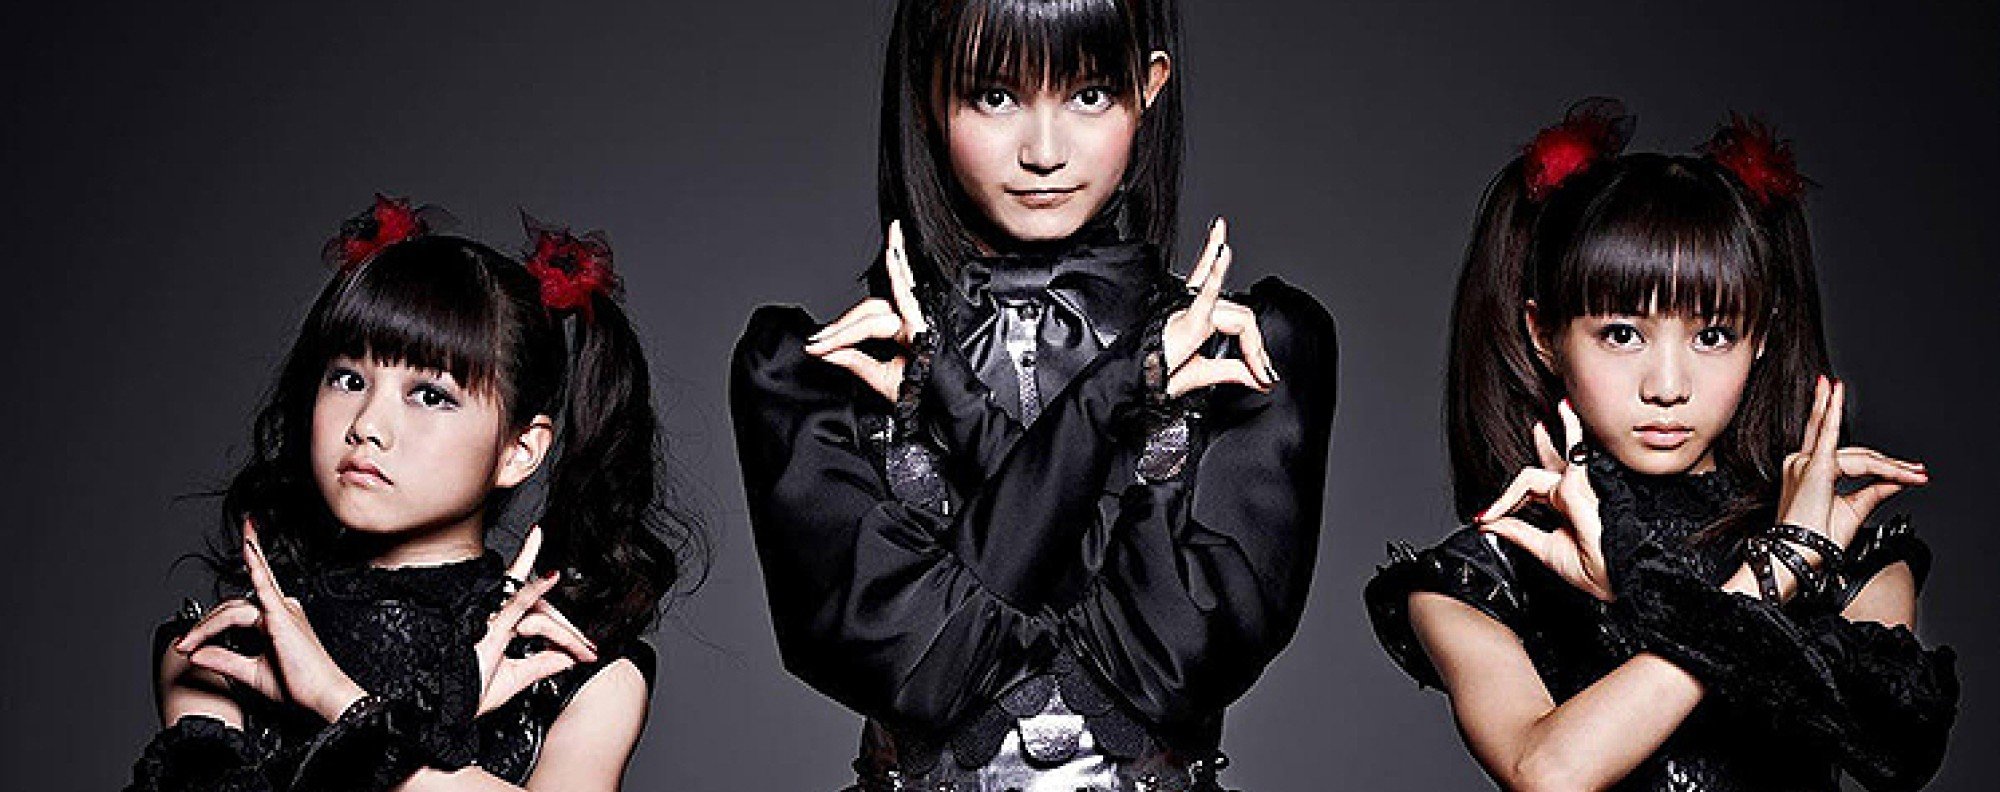 Meet Babymetal: Japan's bizarre mix of teen-idol pop and death